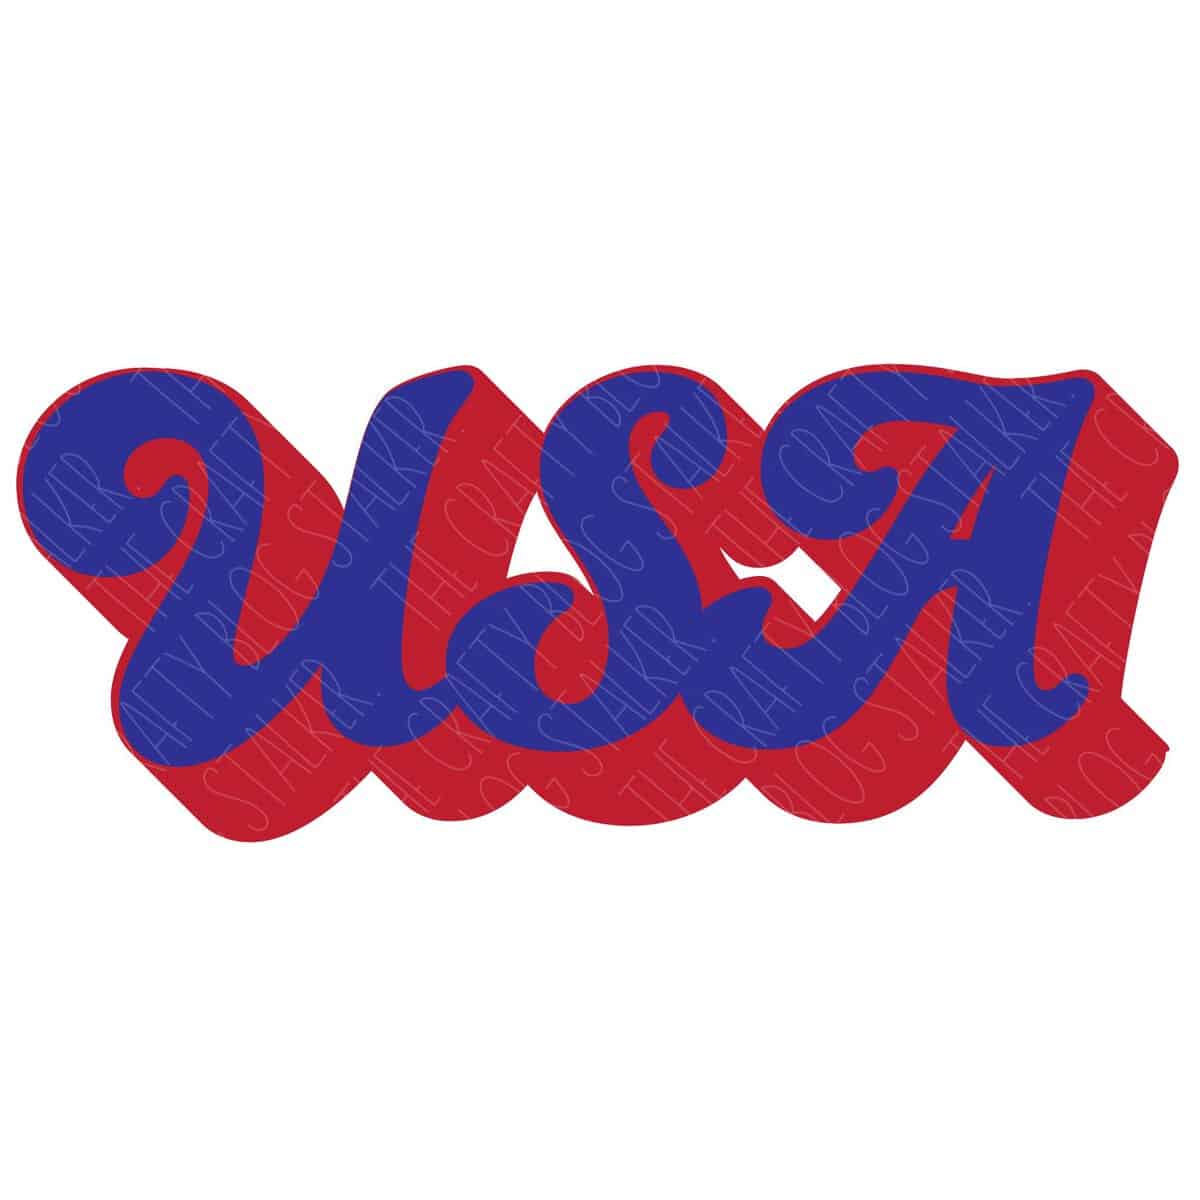 Layered SVG Cut File: Retro USA.